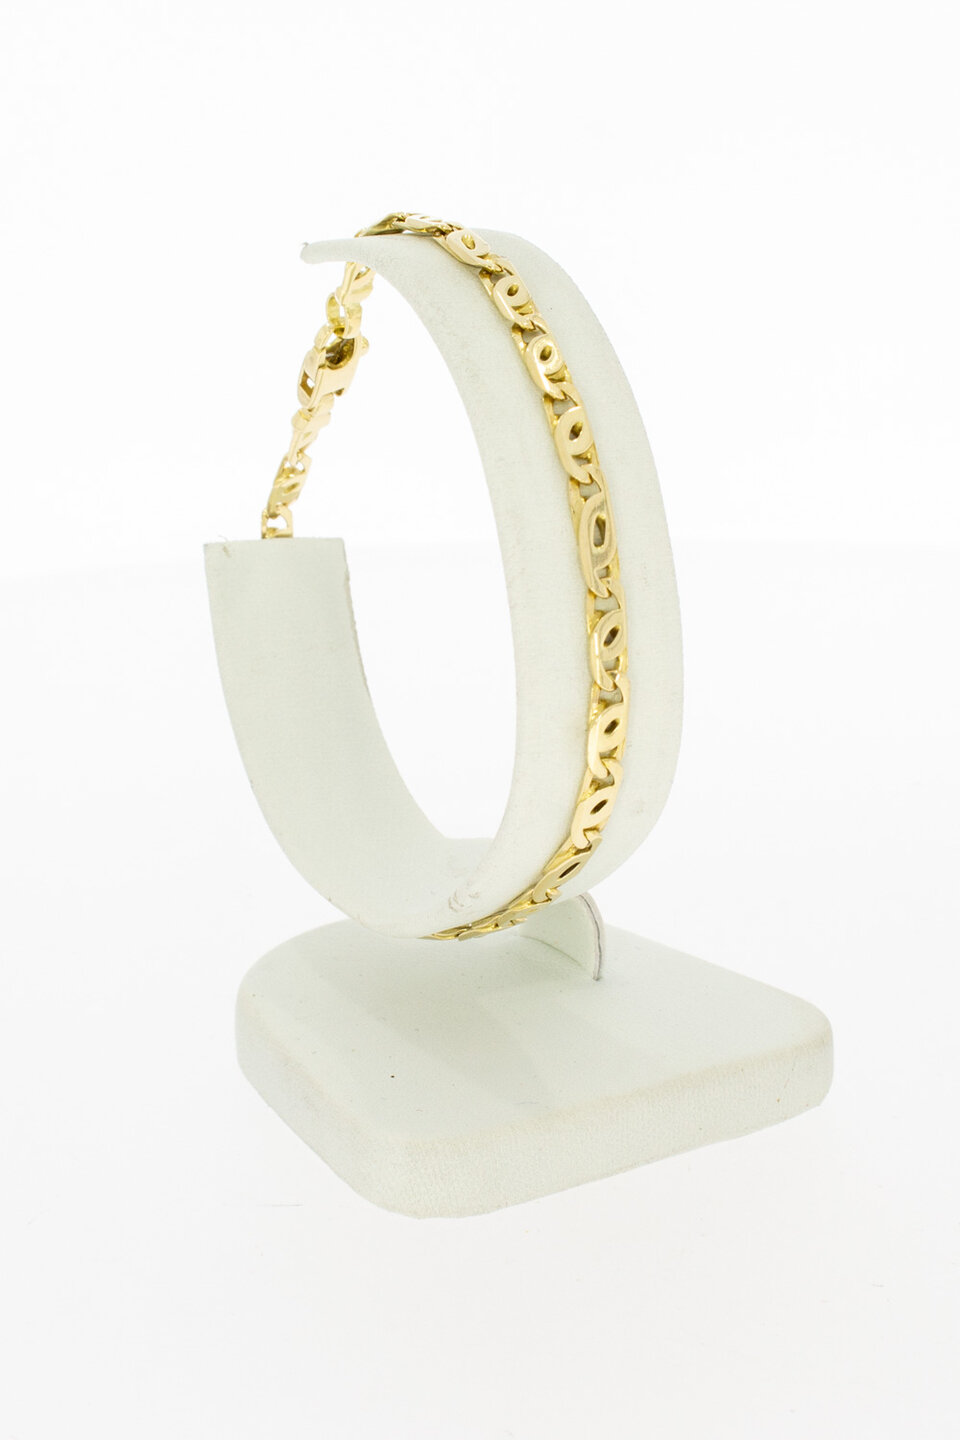 Valkenoog armband 14 karaat goud - 19,5 cm